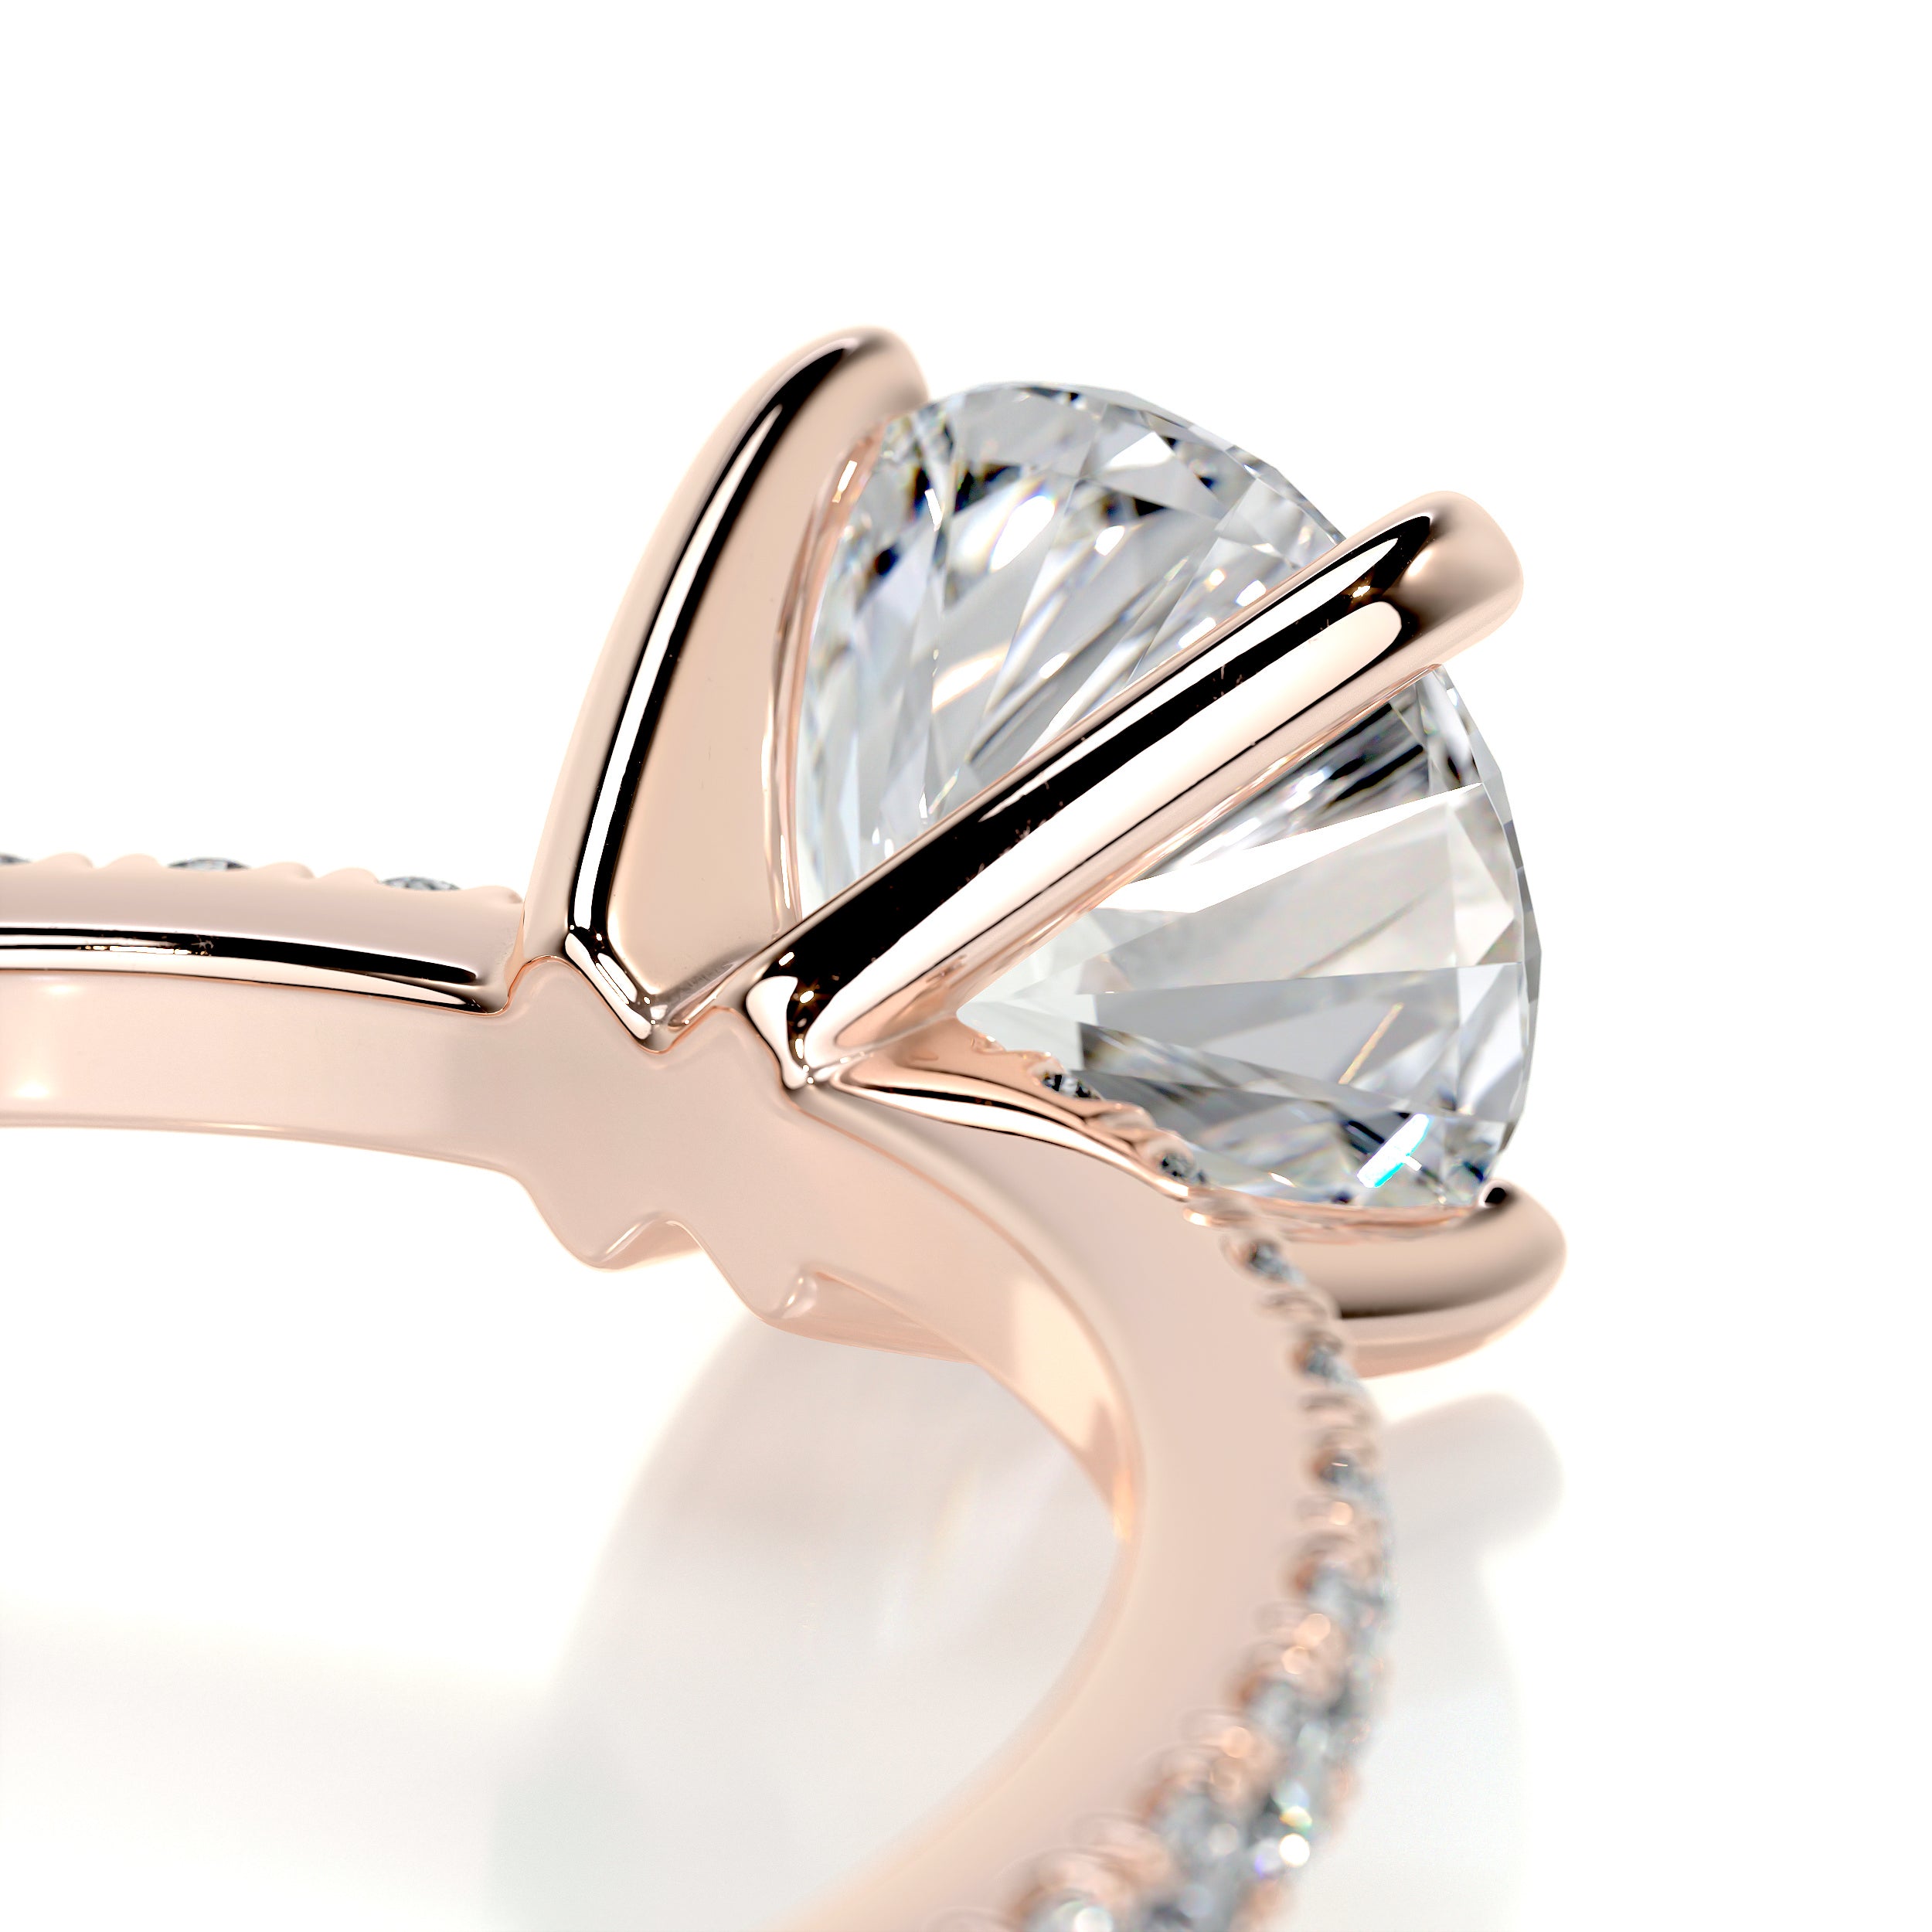 Stephanie Diamond Engagement Ring   (1.3 Carat) -14K Rose Gold